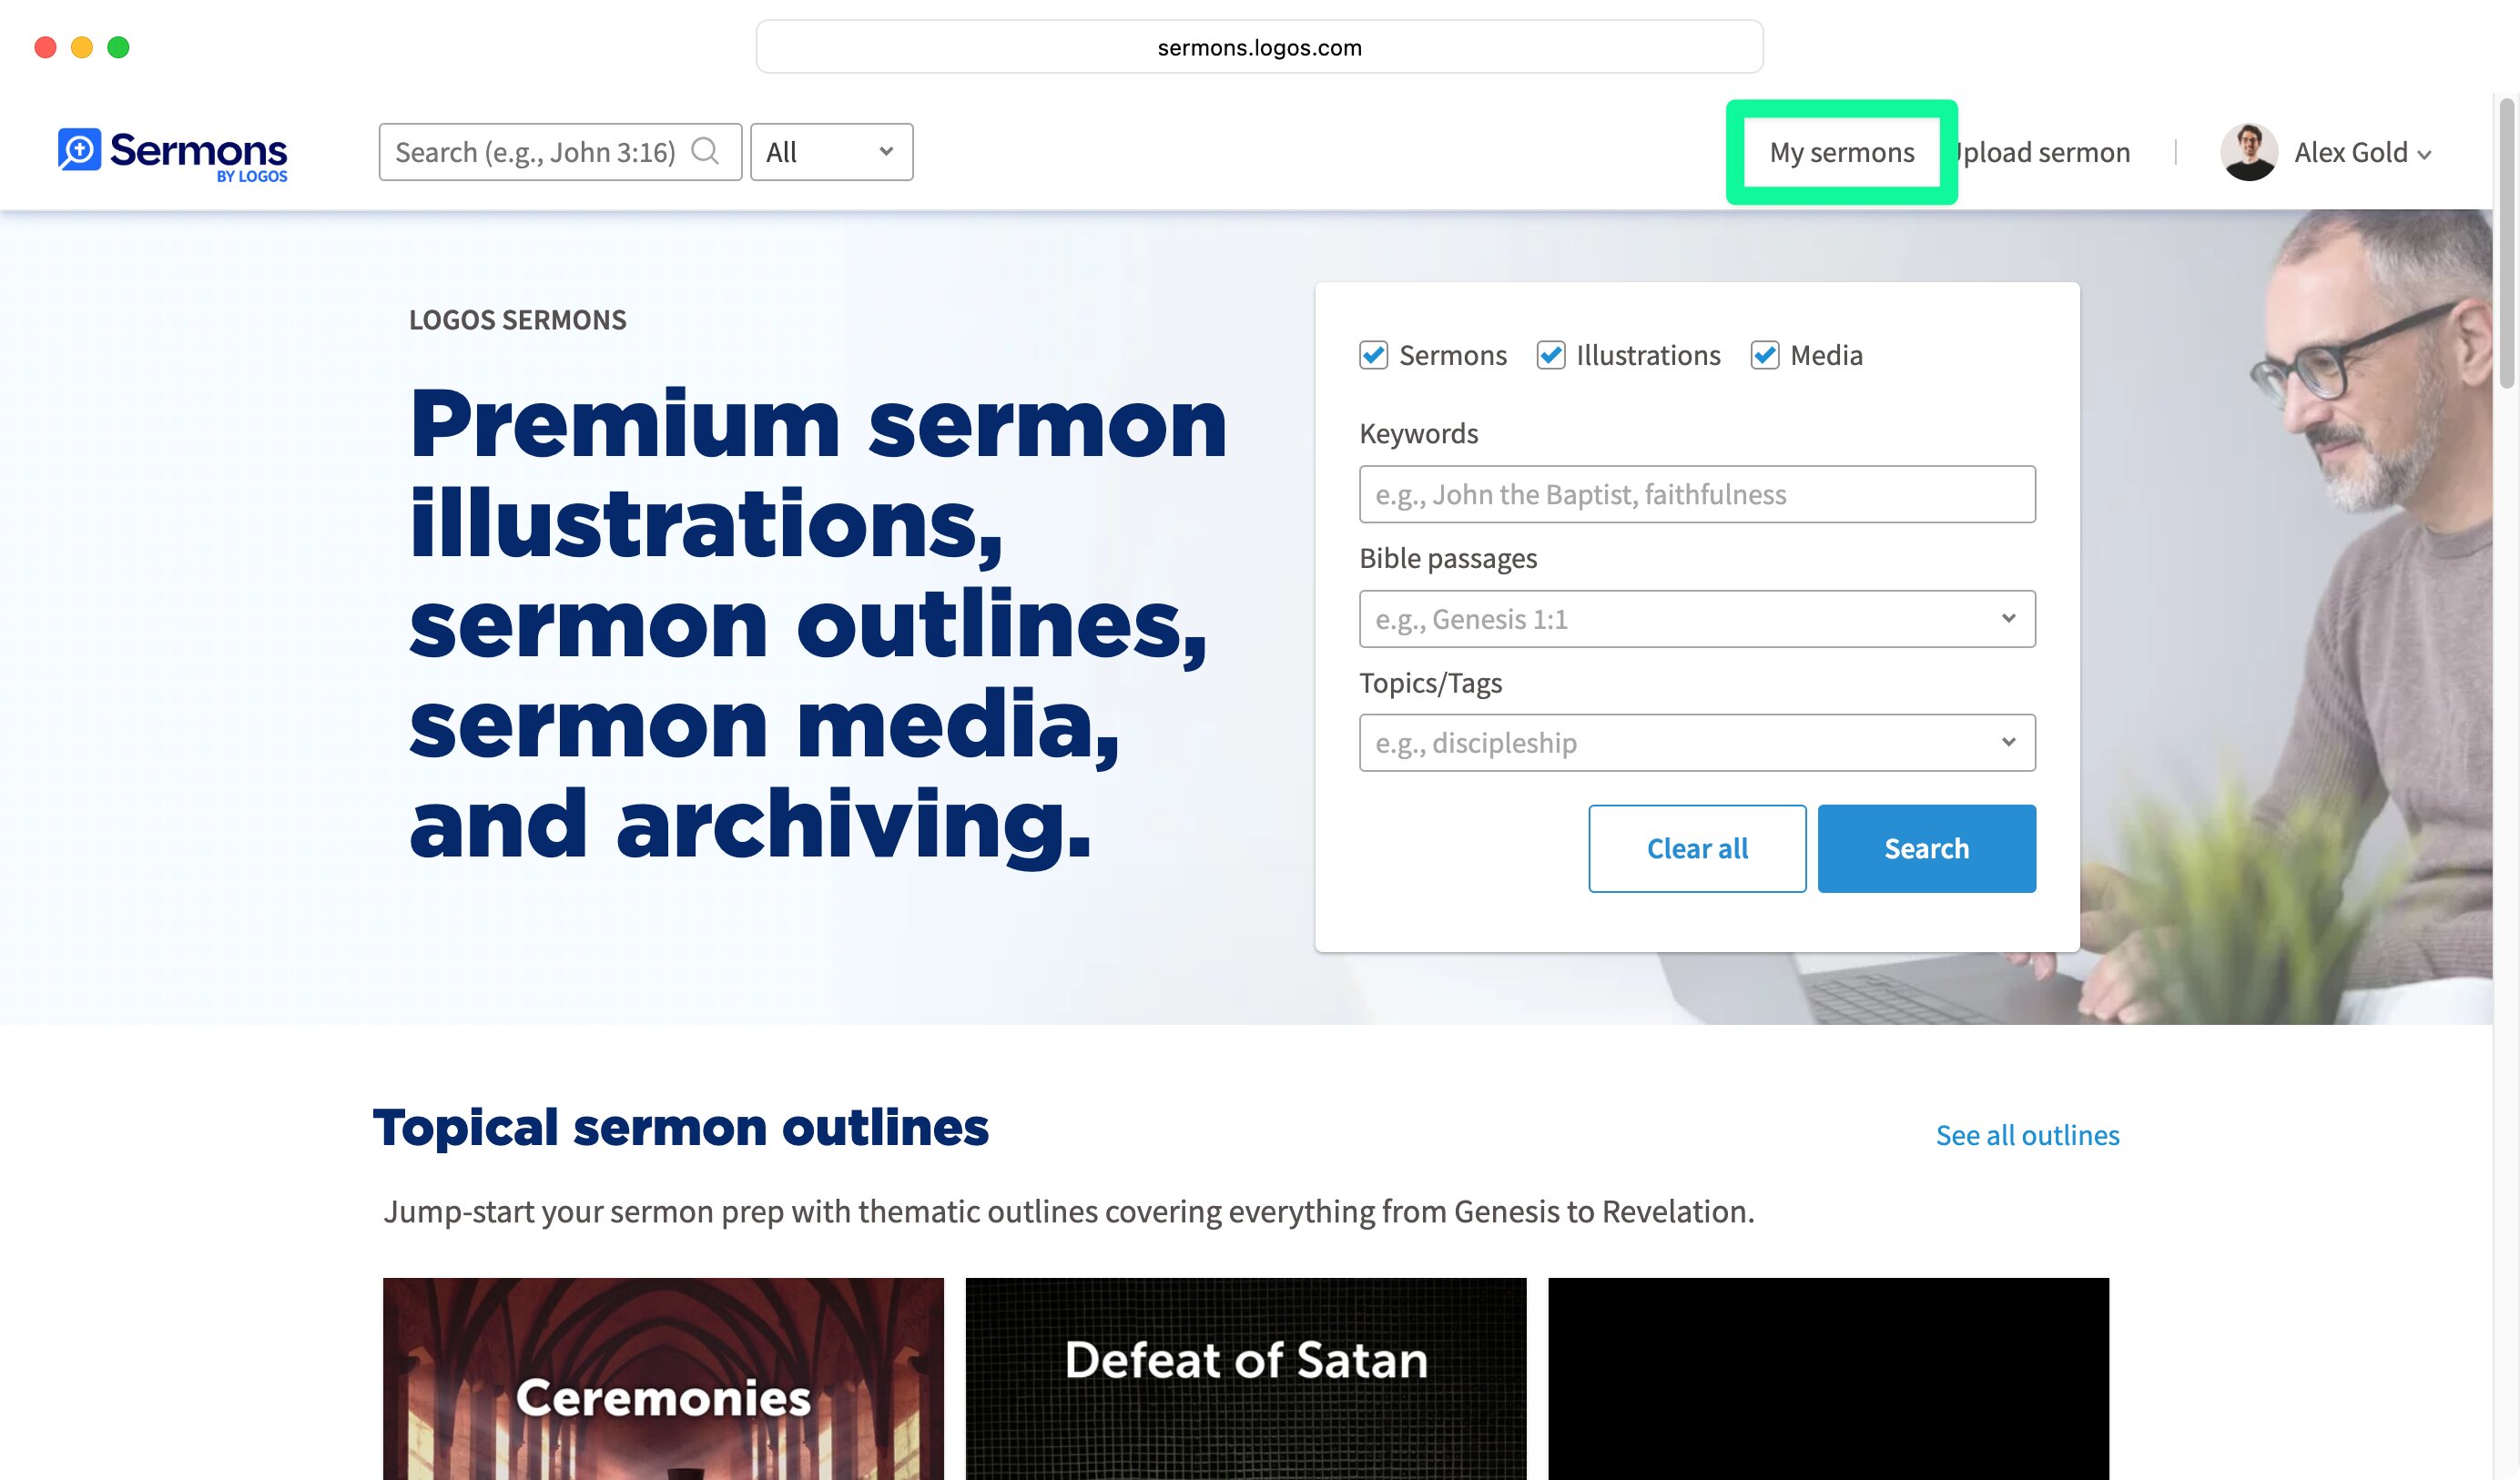 Logos Sermons homepage with My Sermons menu option highlighted